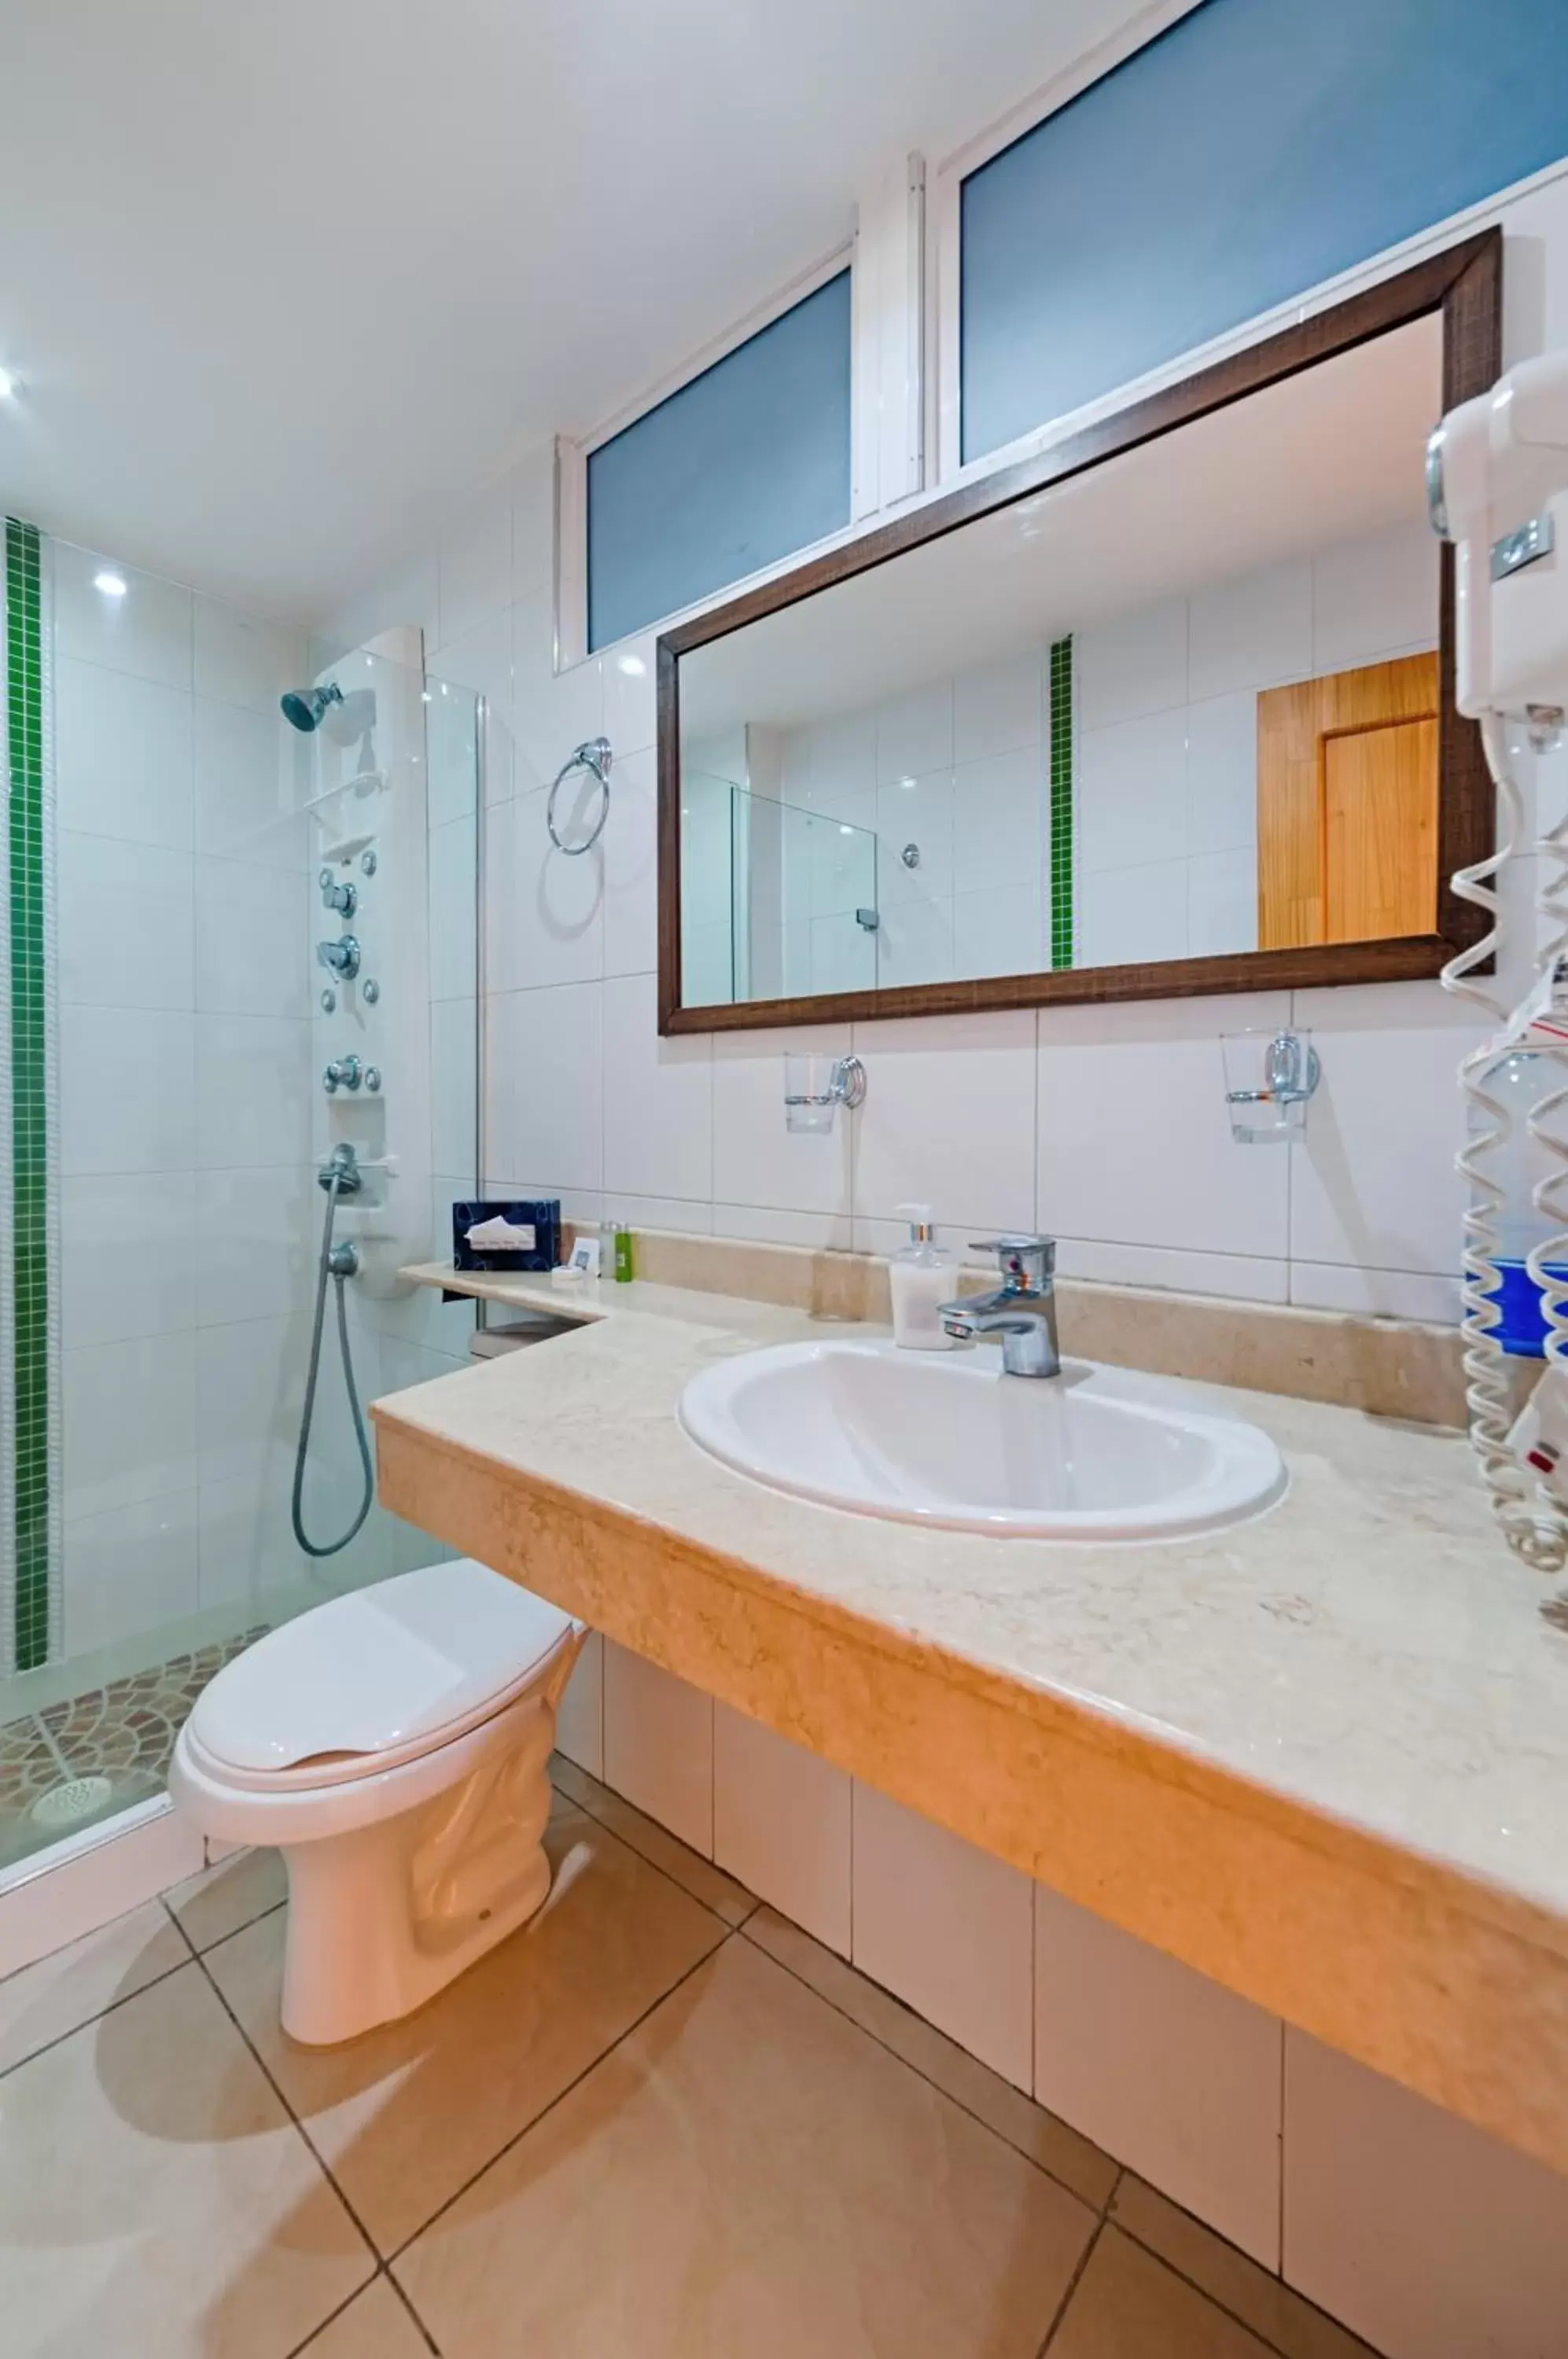 Bathroom in Basic Hotel Centenario by Hoteles MS